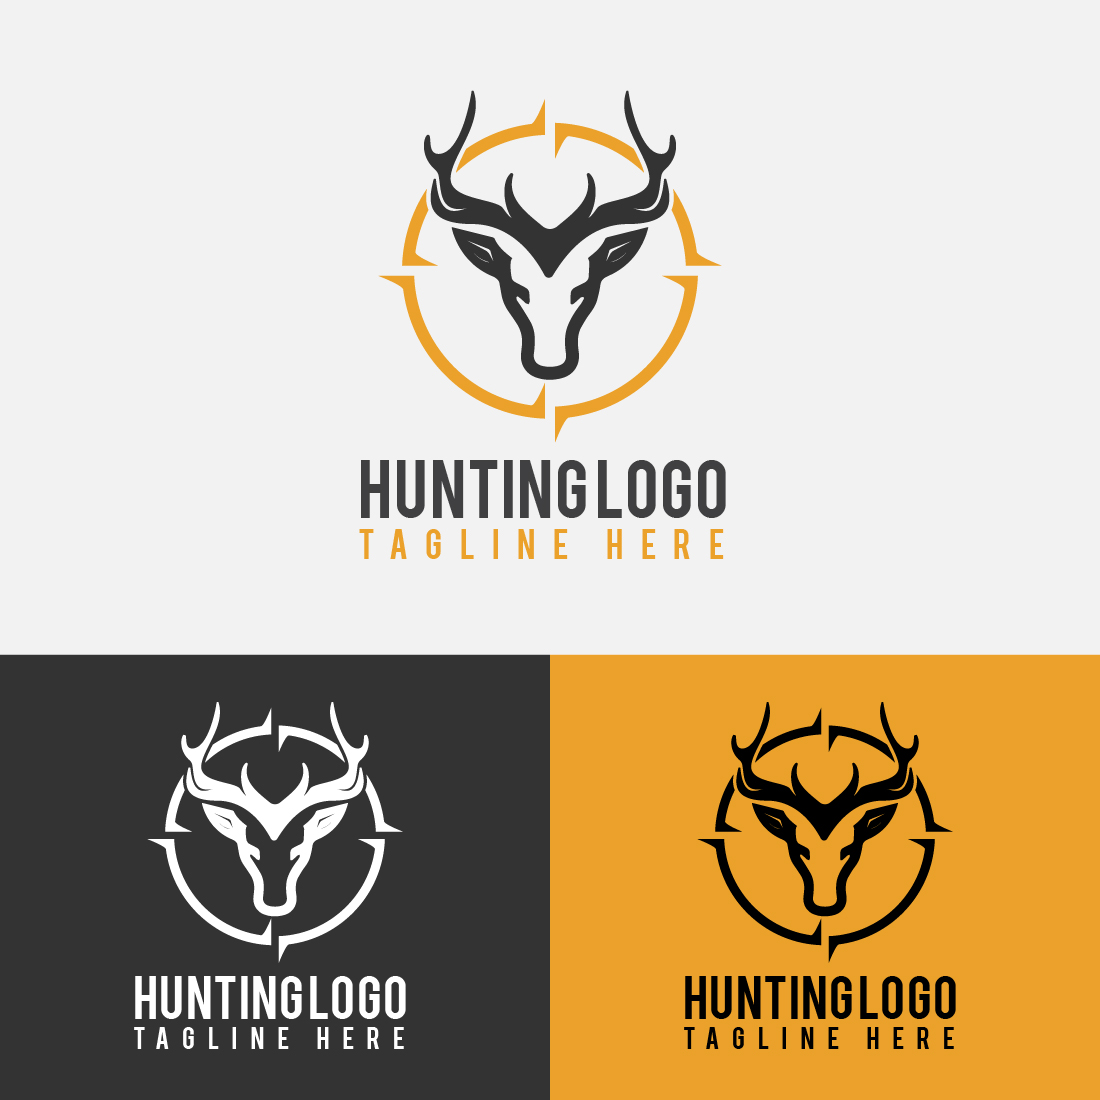 Deer Hunting Logo Design Template cover image.